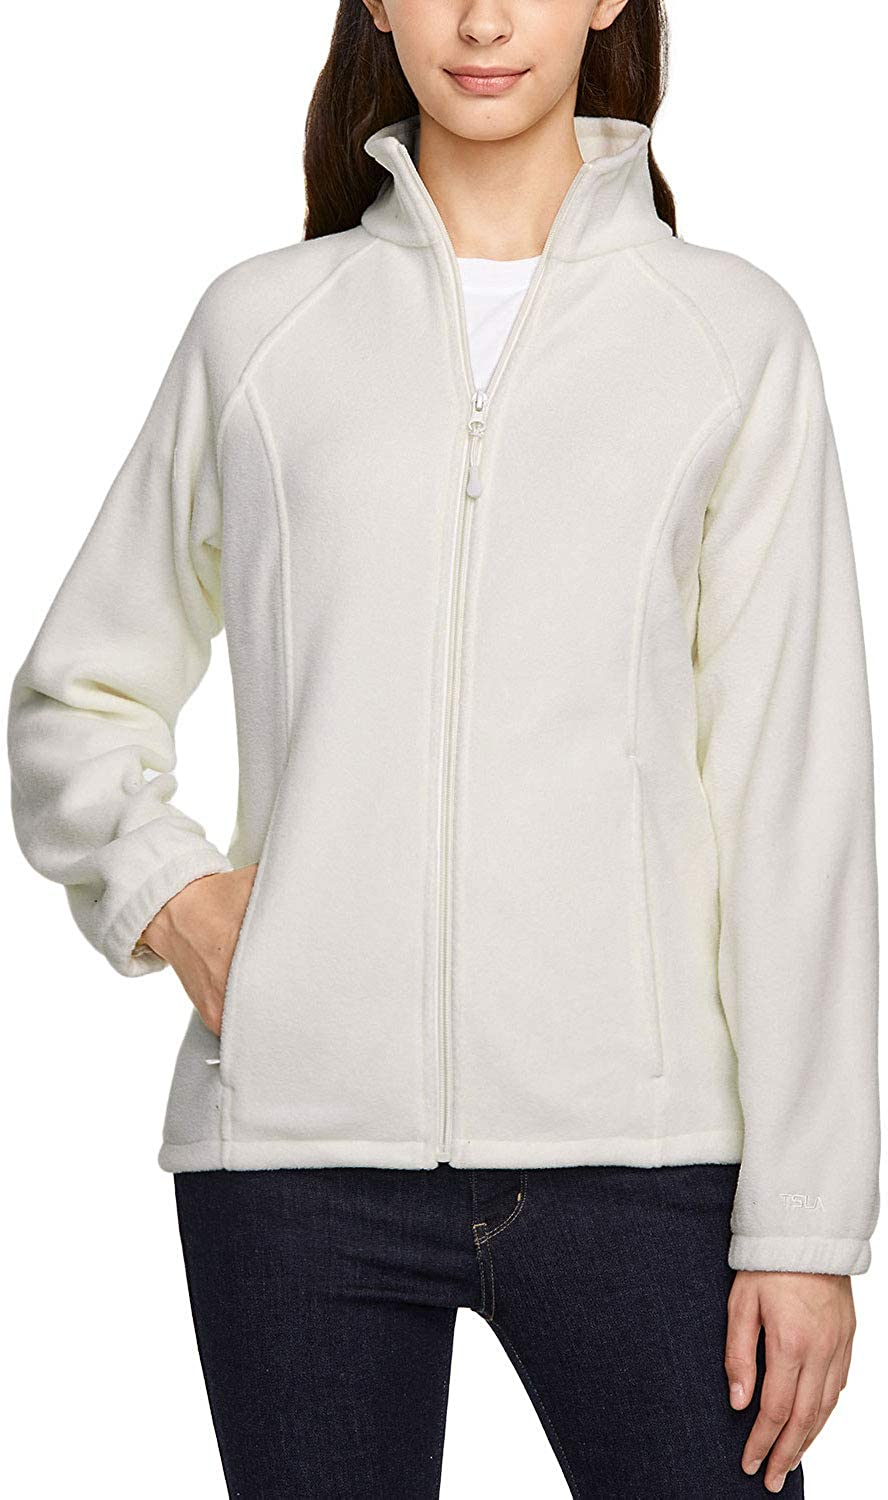 TSLA Women's Full Zip Polar Fleece Jacket, Long Sleeve Warm Casual Winter  Jacket, Thermal Mountain Outdoor Jacket